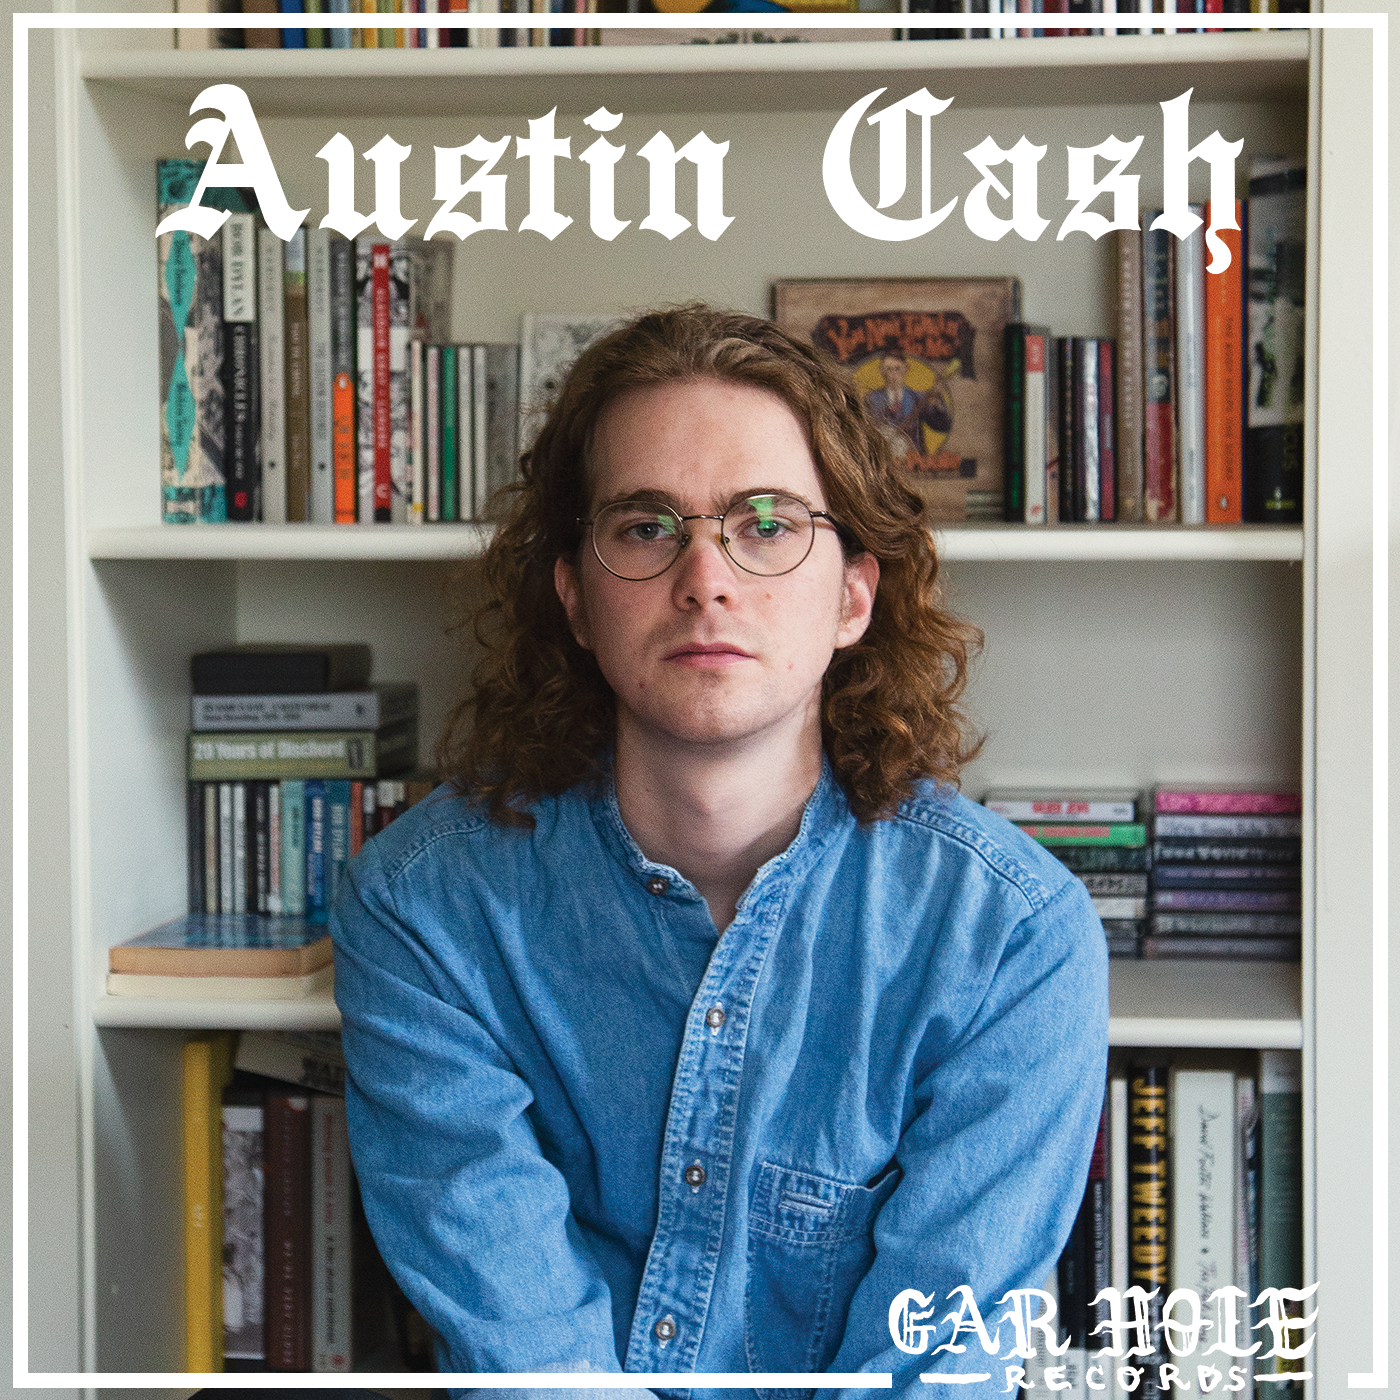 New Artist: Austin Cash